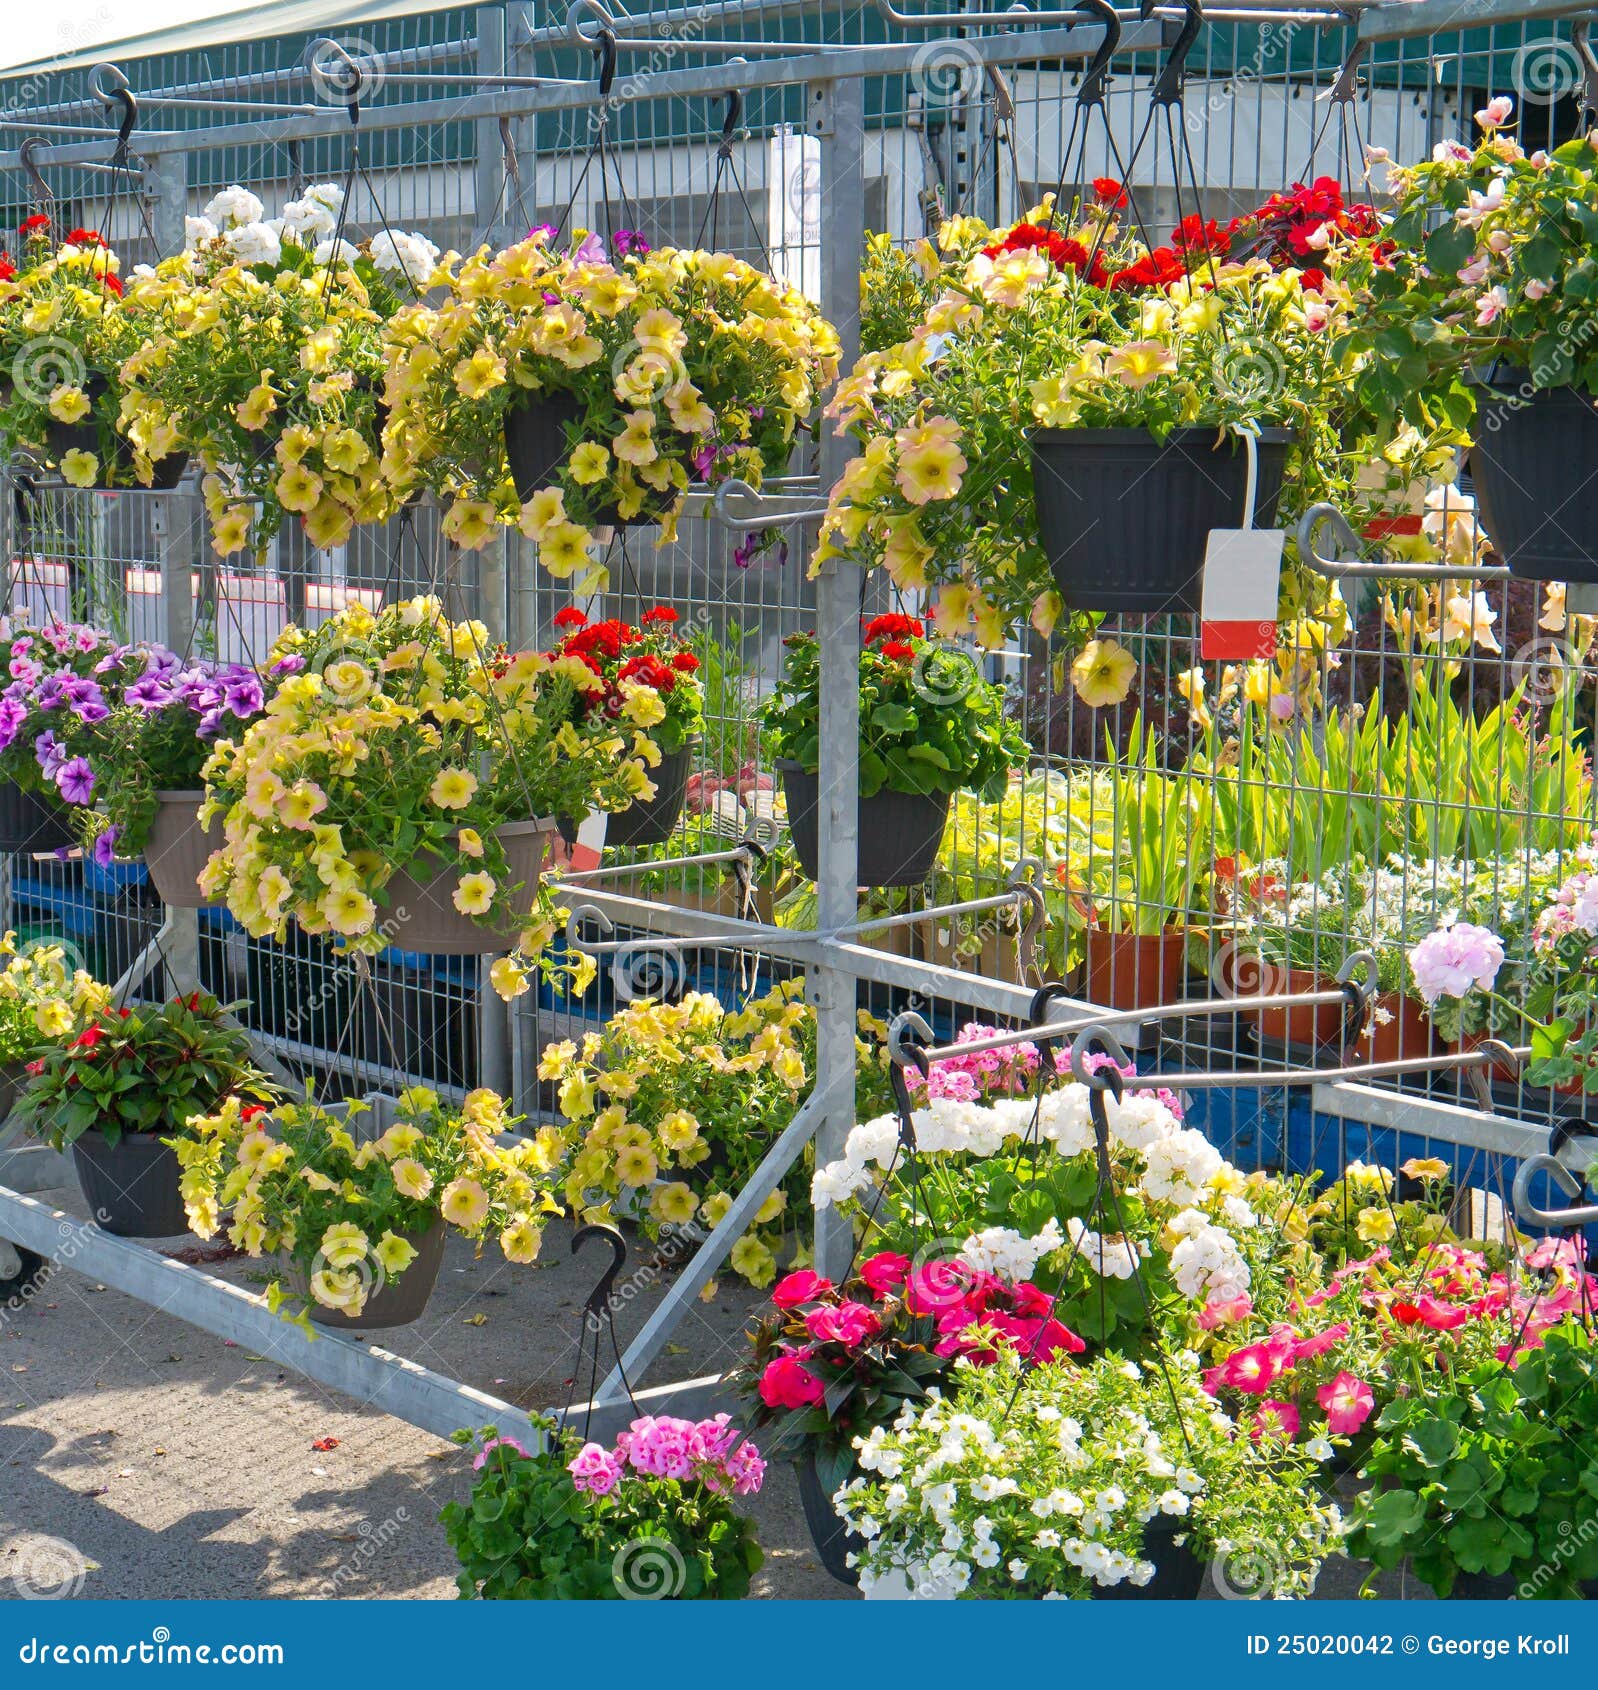 hanging flower baskets in garden center stock photo - image of mart